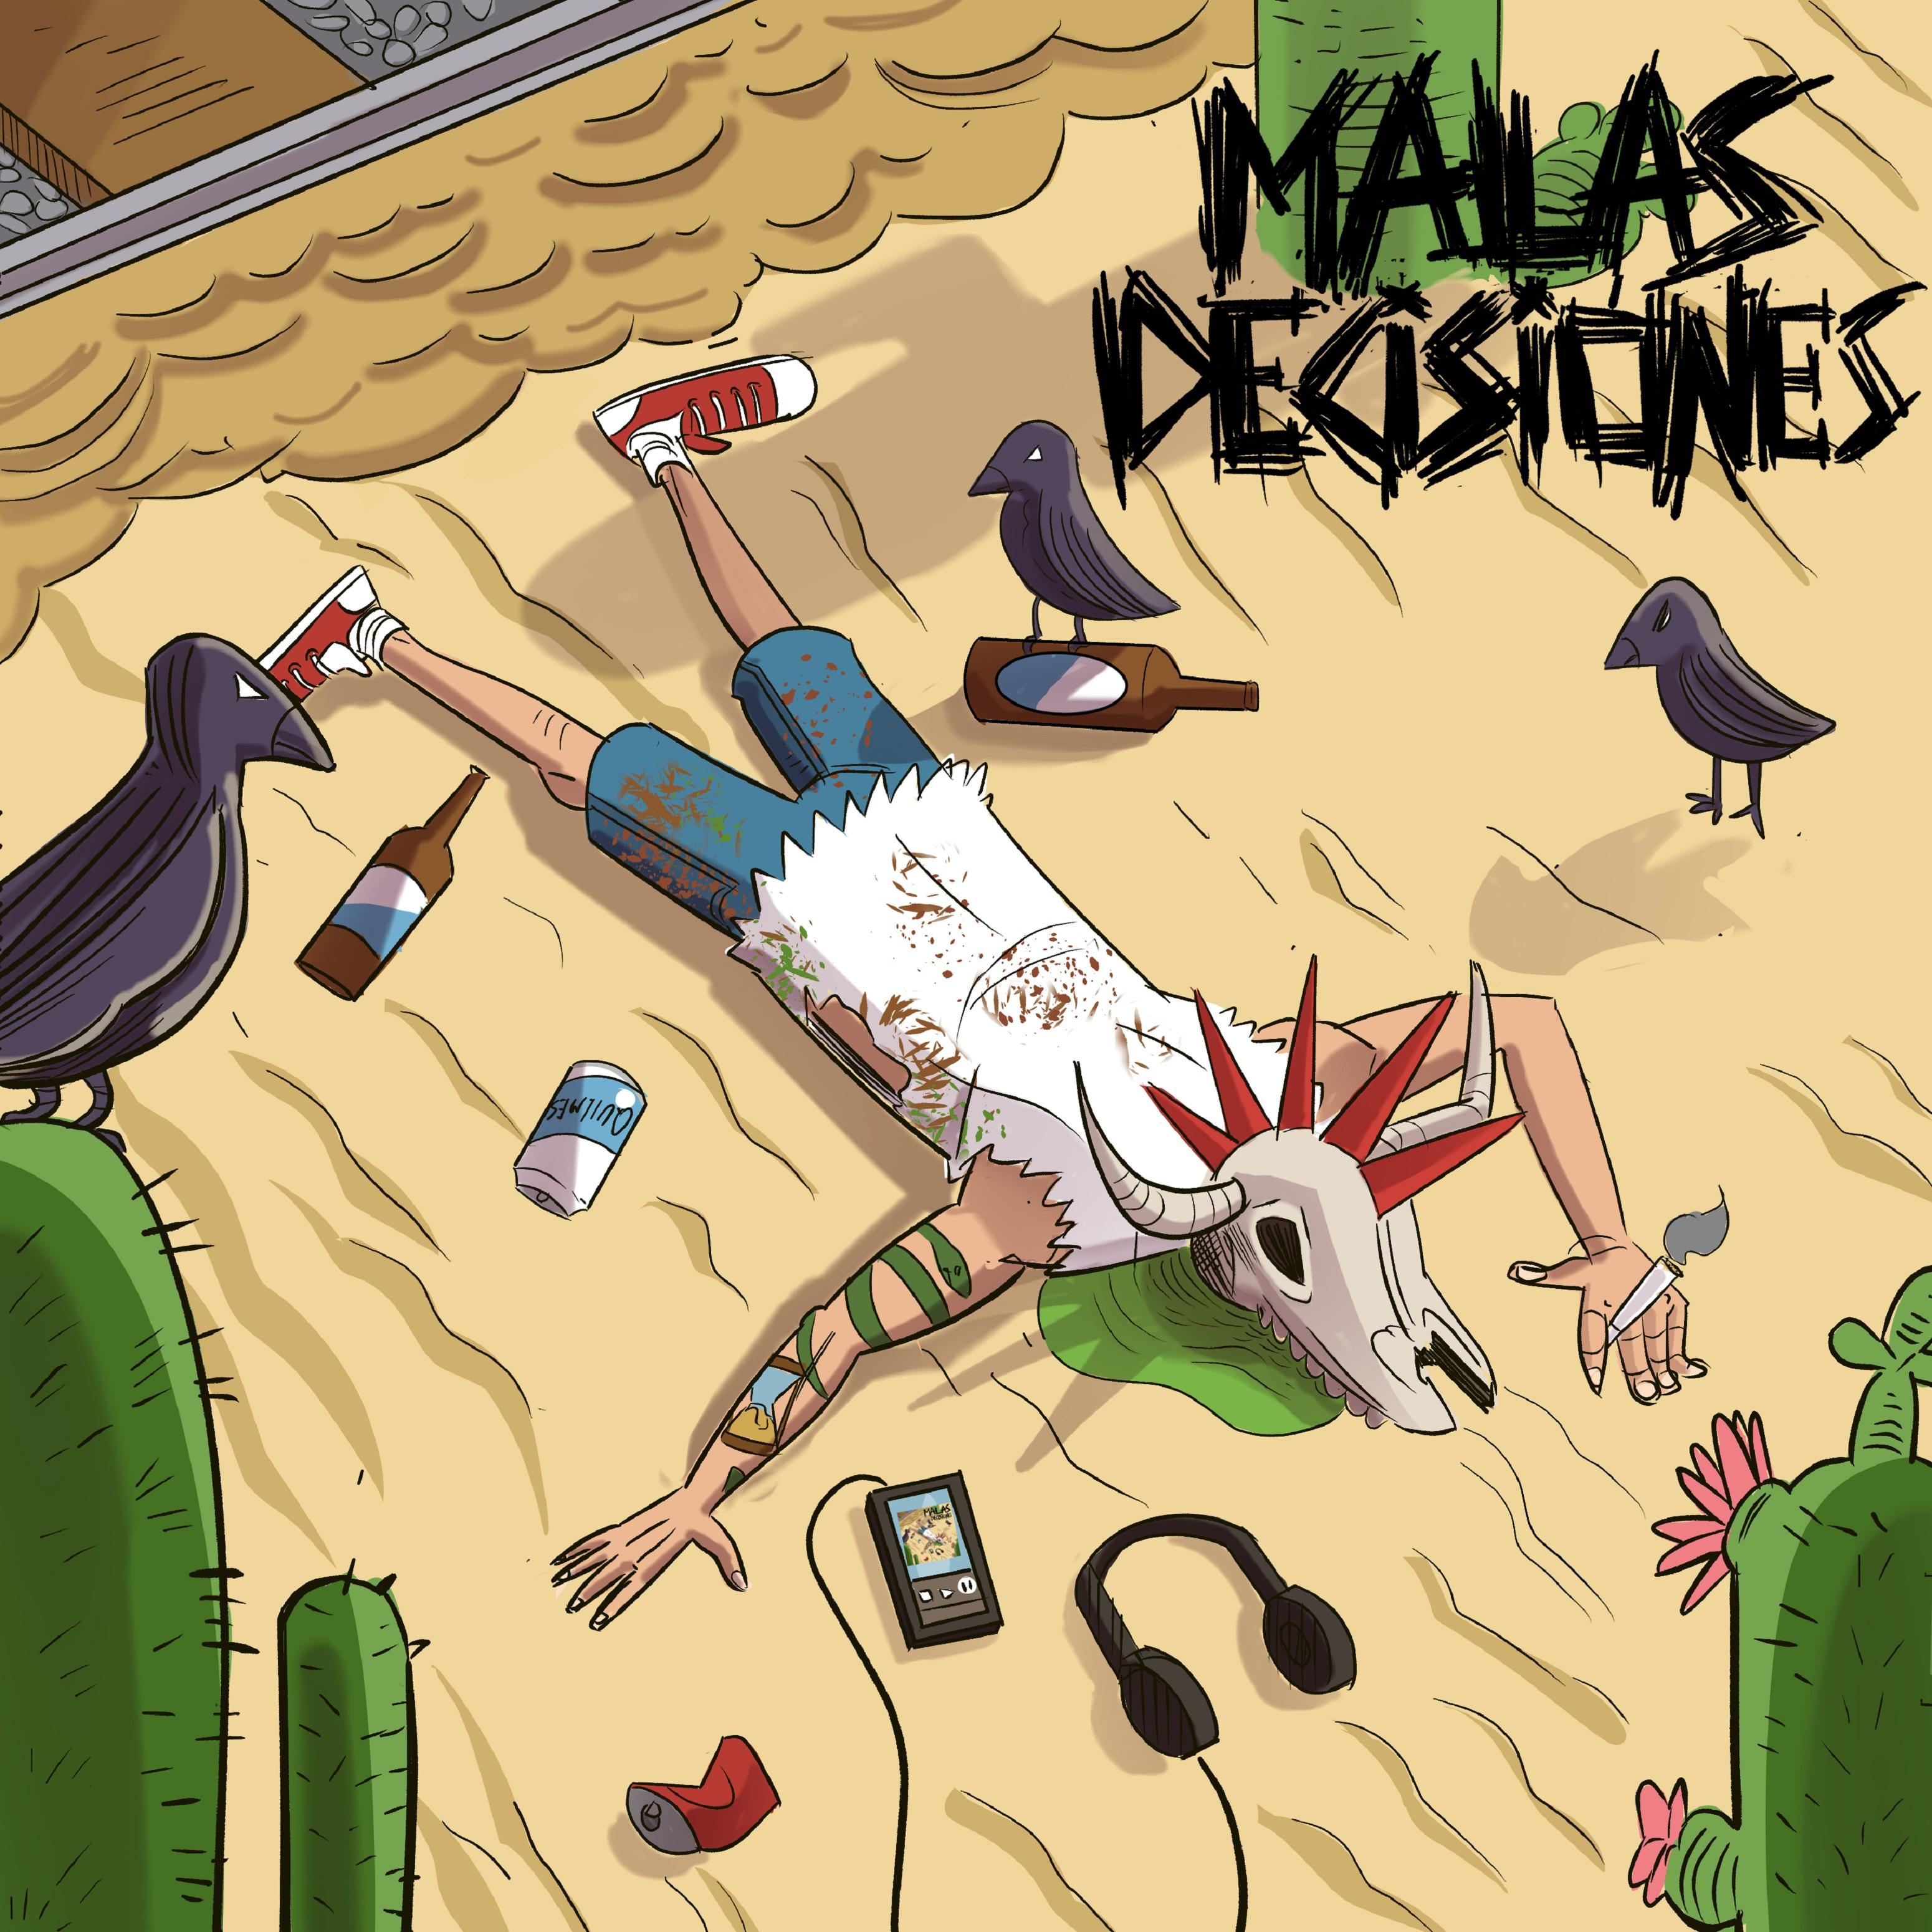 Постер альбома Malas Decisiones